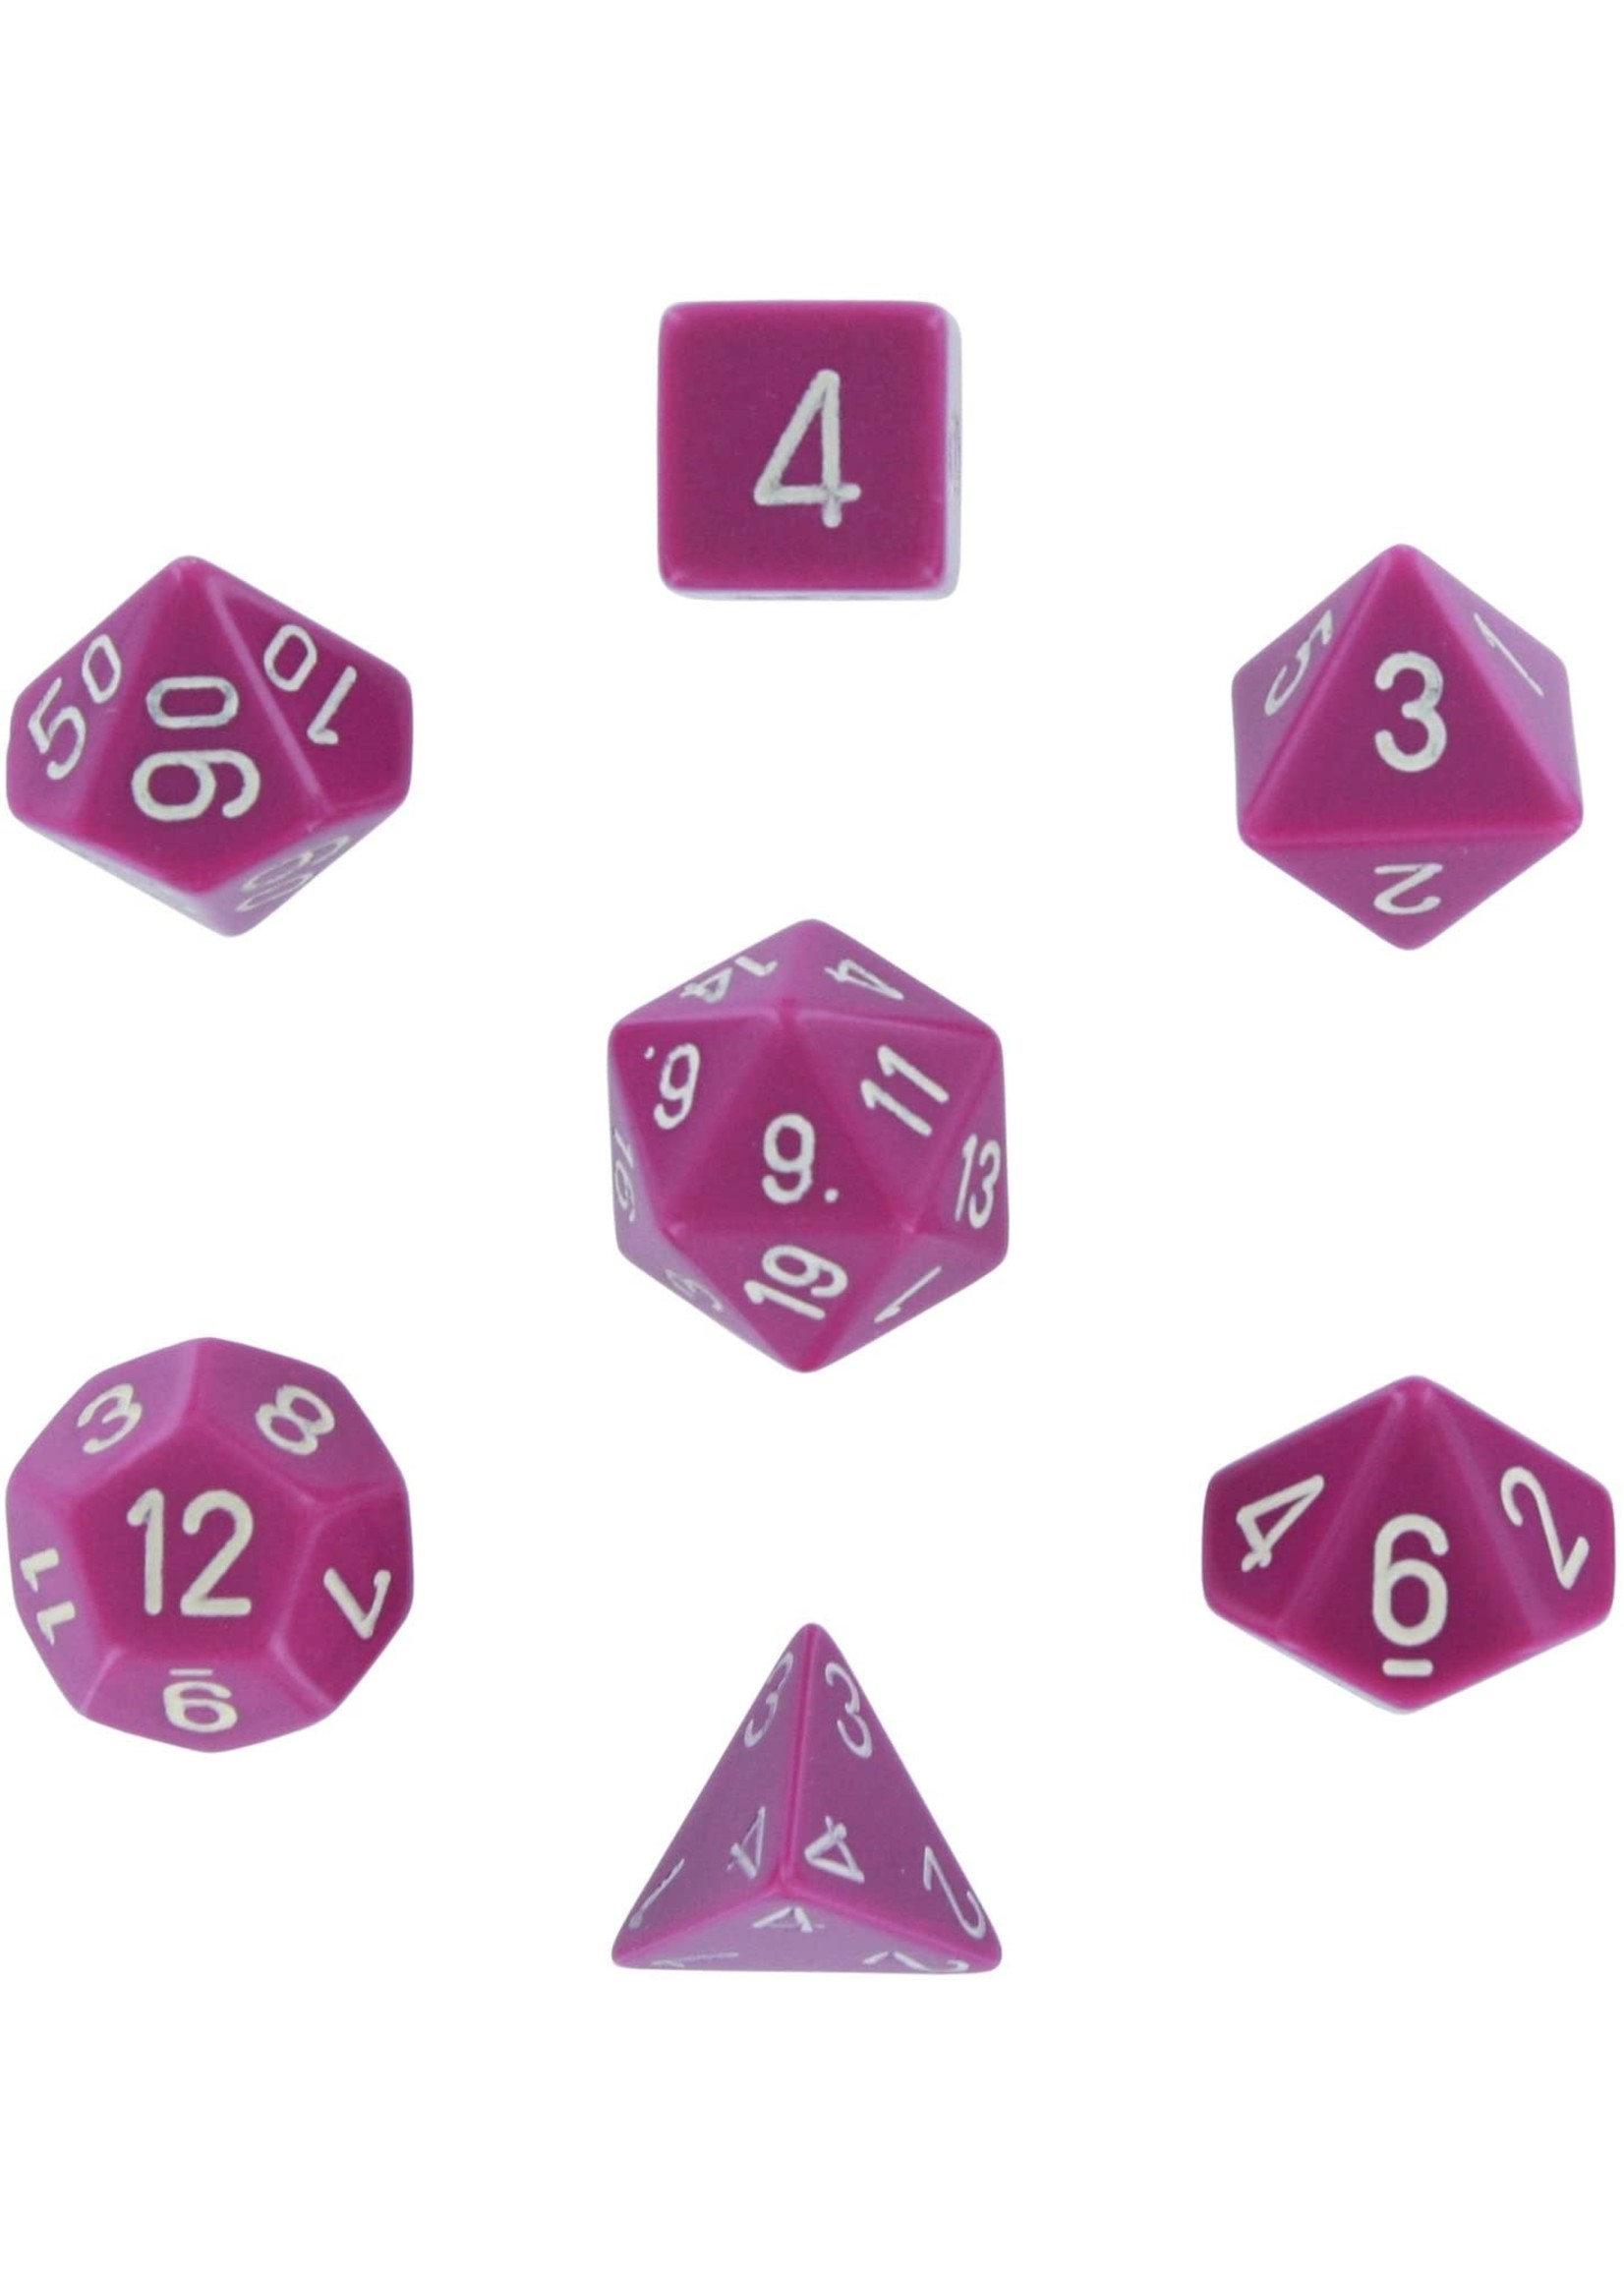 Chessex Opaque Poly 7 set: Light Purple w/ White